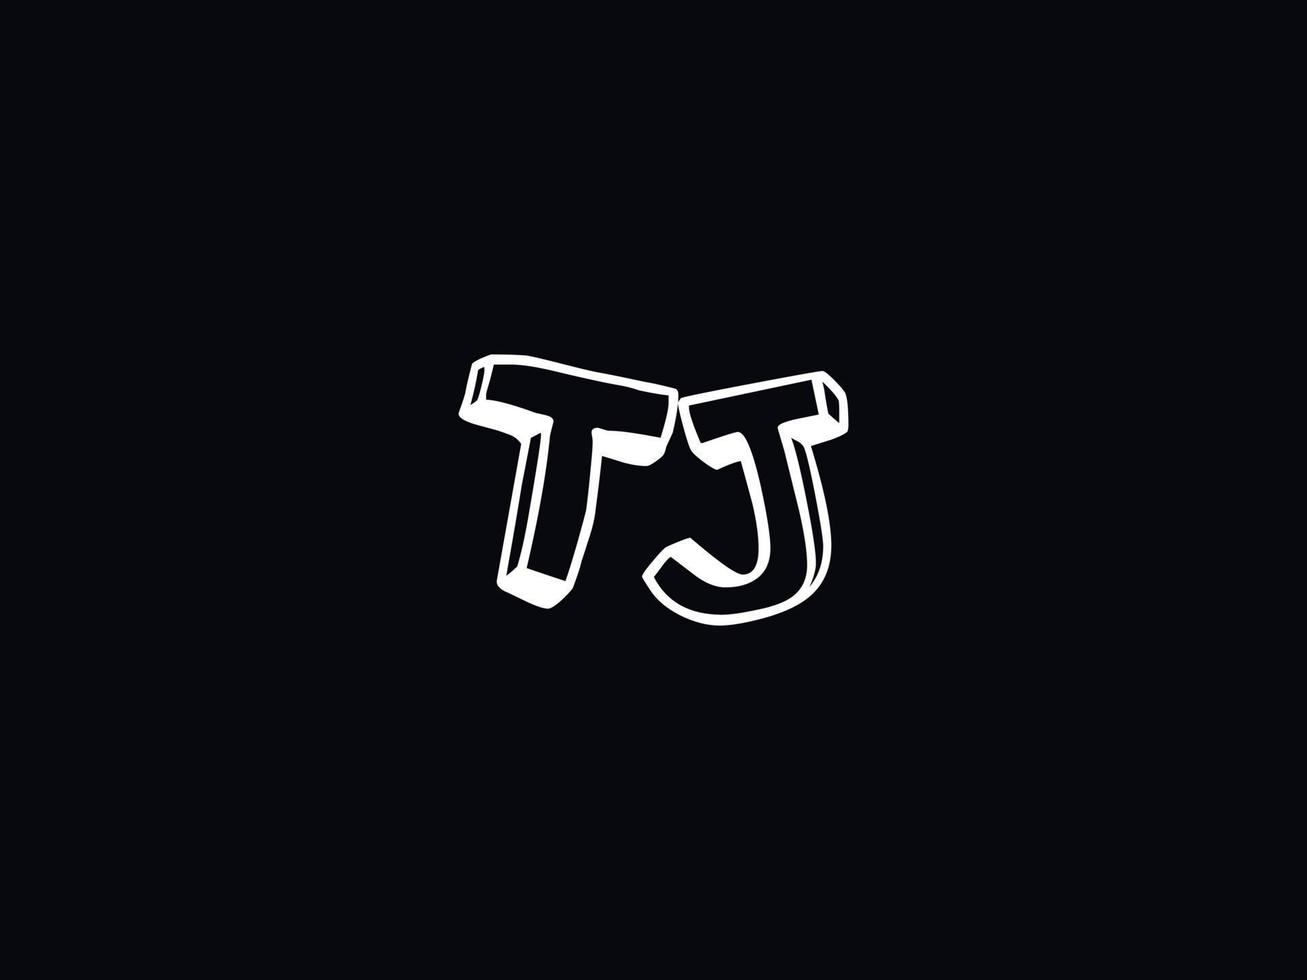 bunt tj Logo Symbol, minimalistisch tj Logo Brief Design vektor